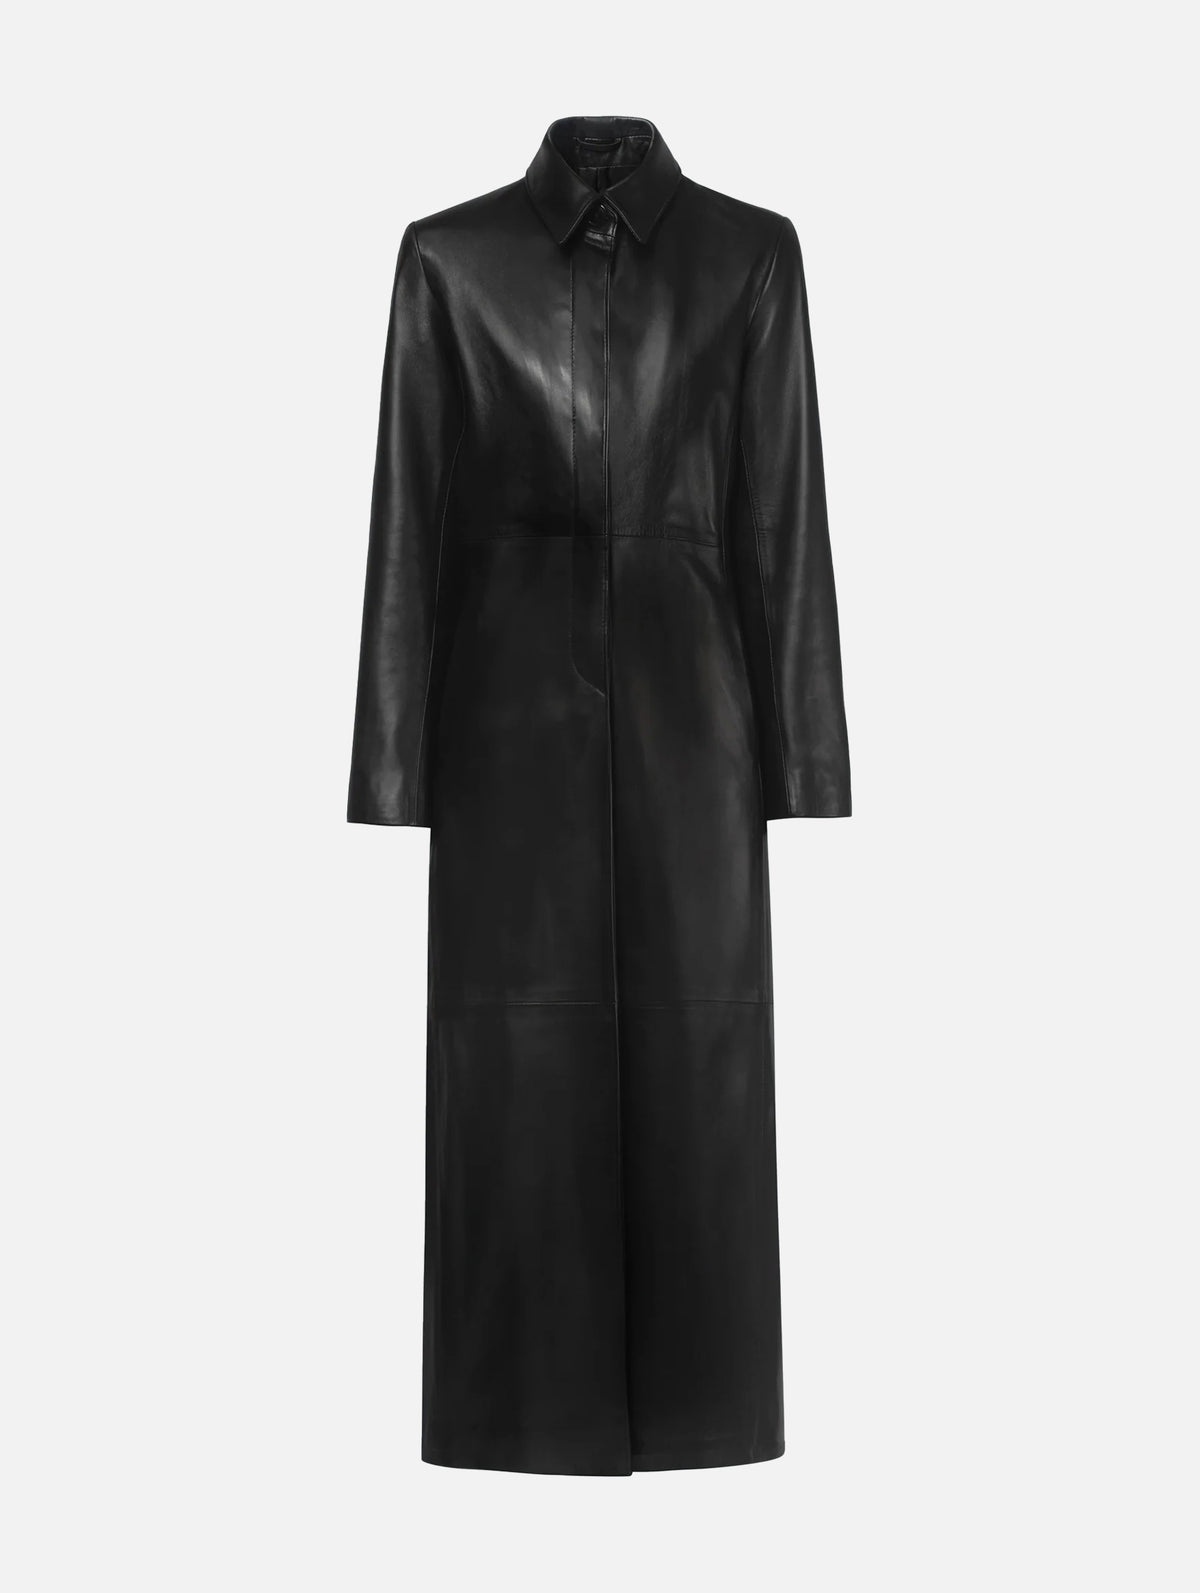 Gotham Sleek Leather Coat in Black